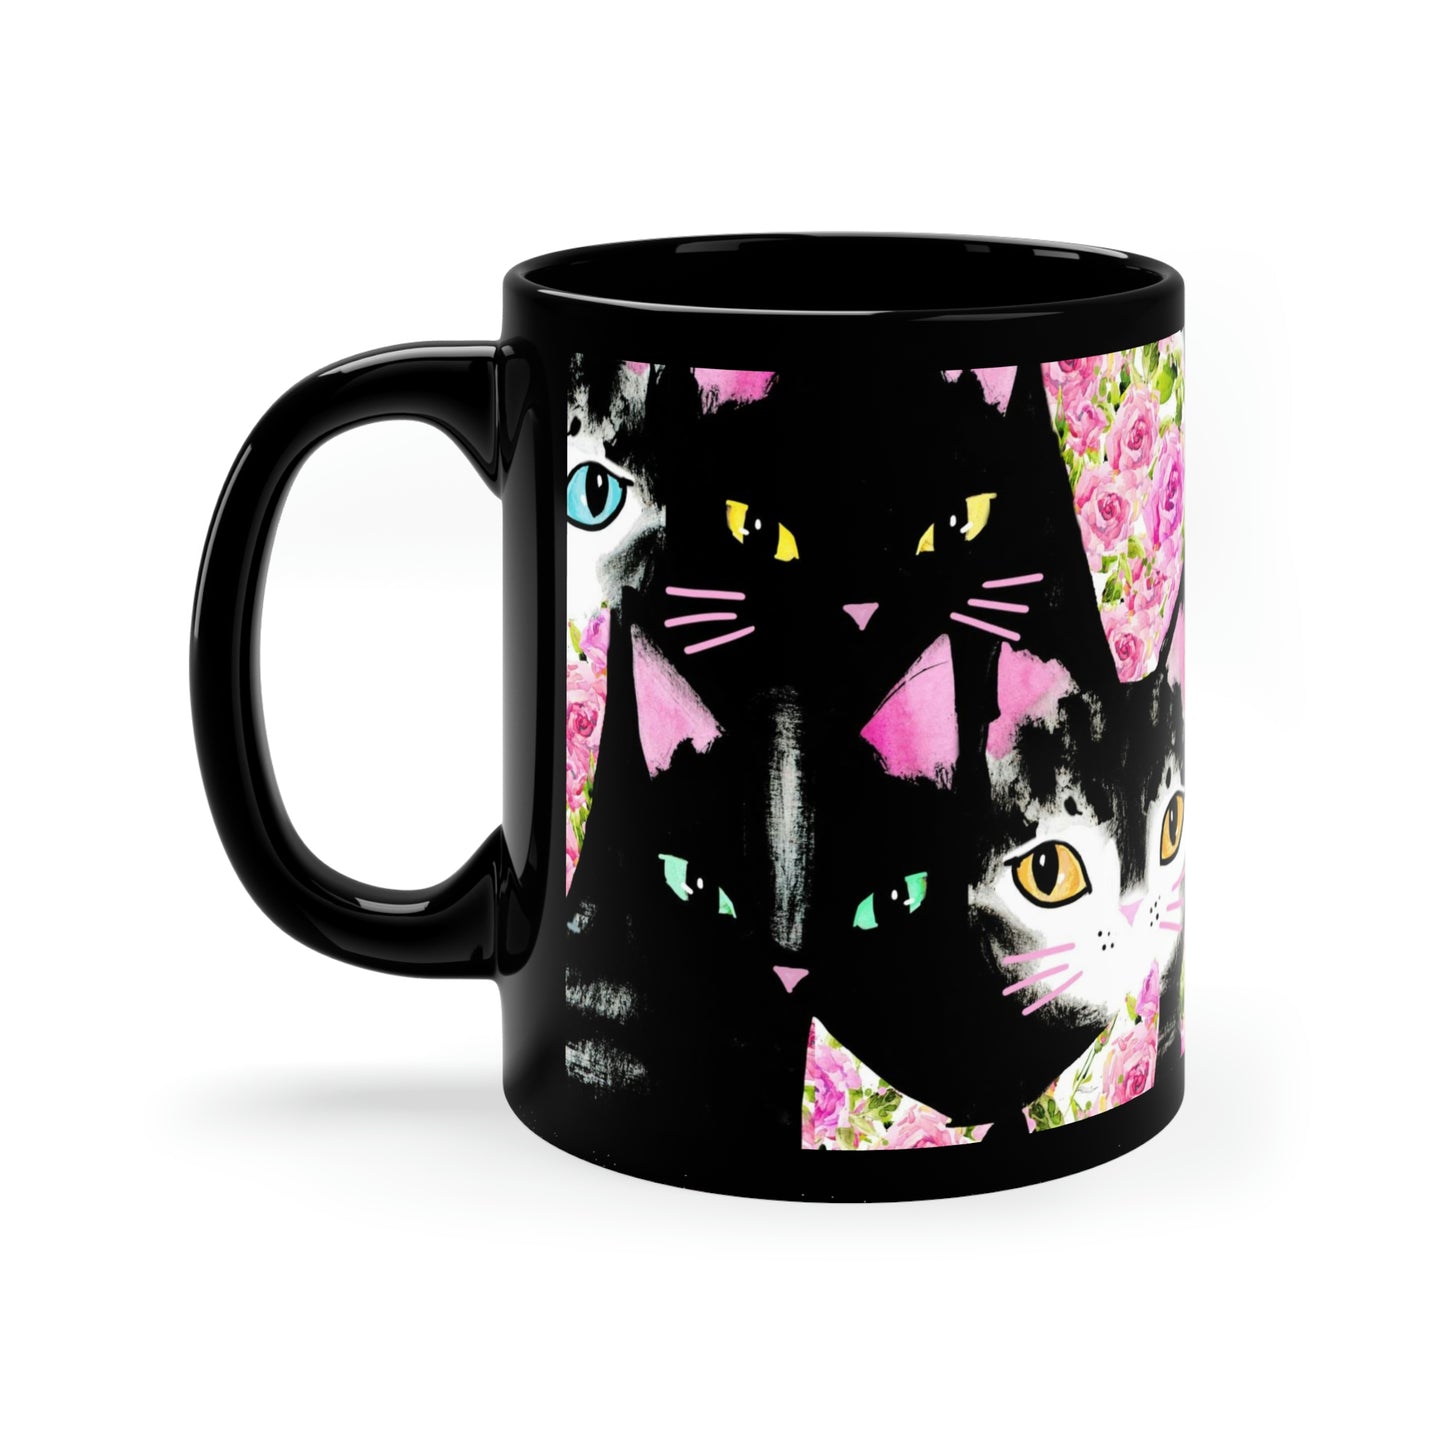 Cats & Roses Mug